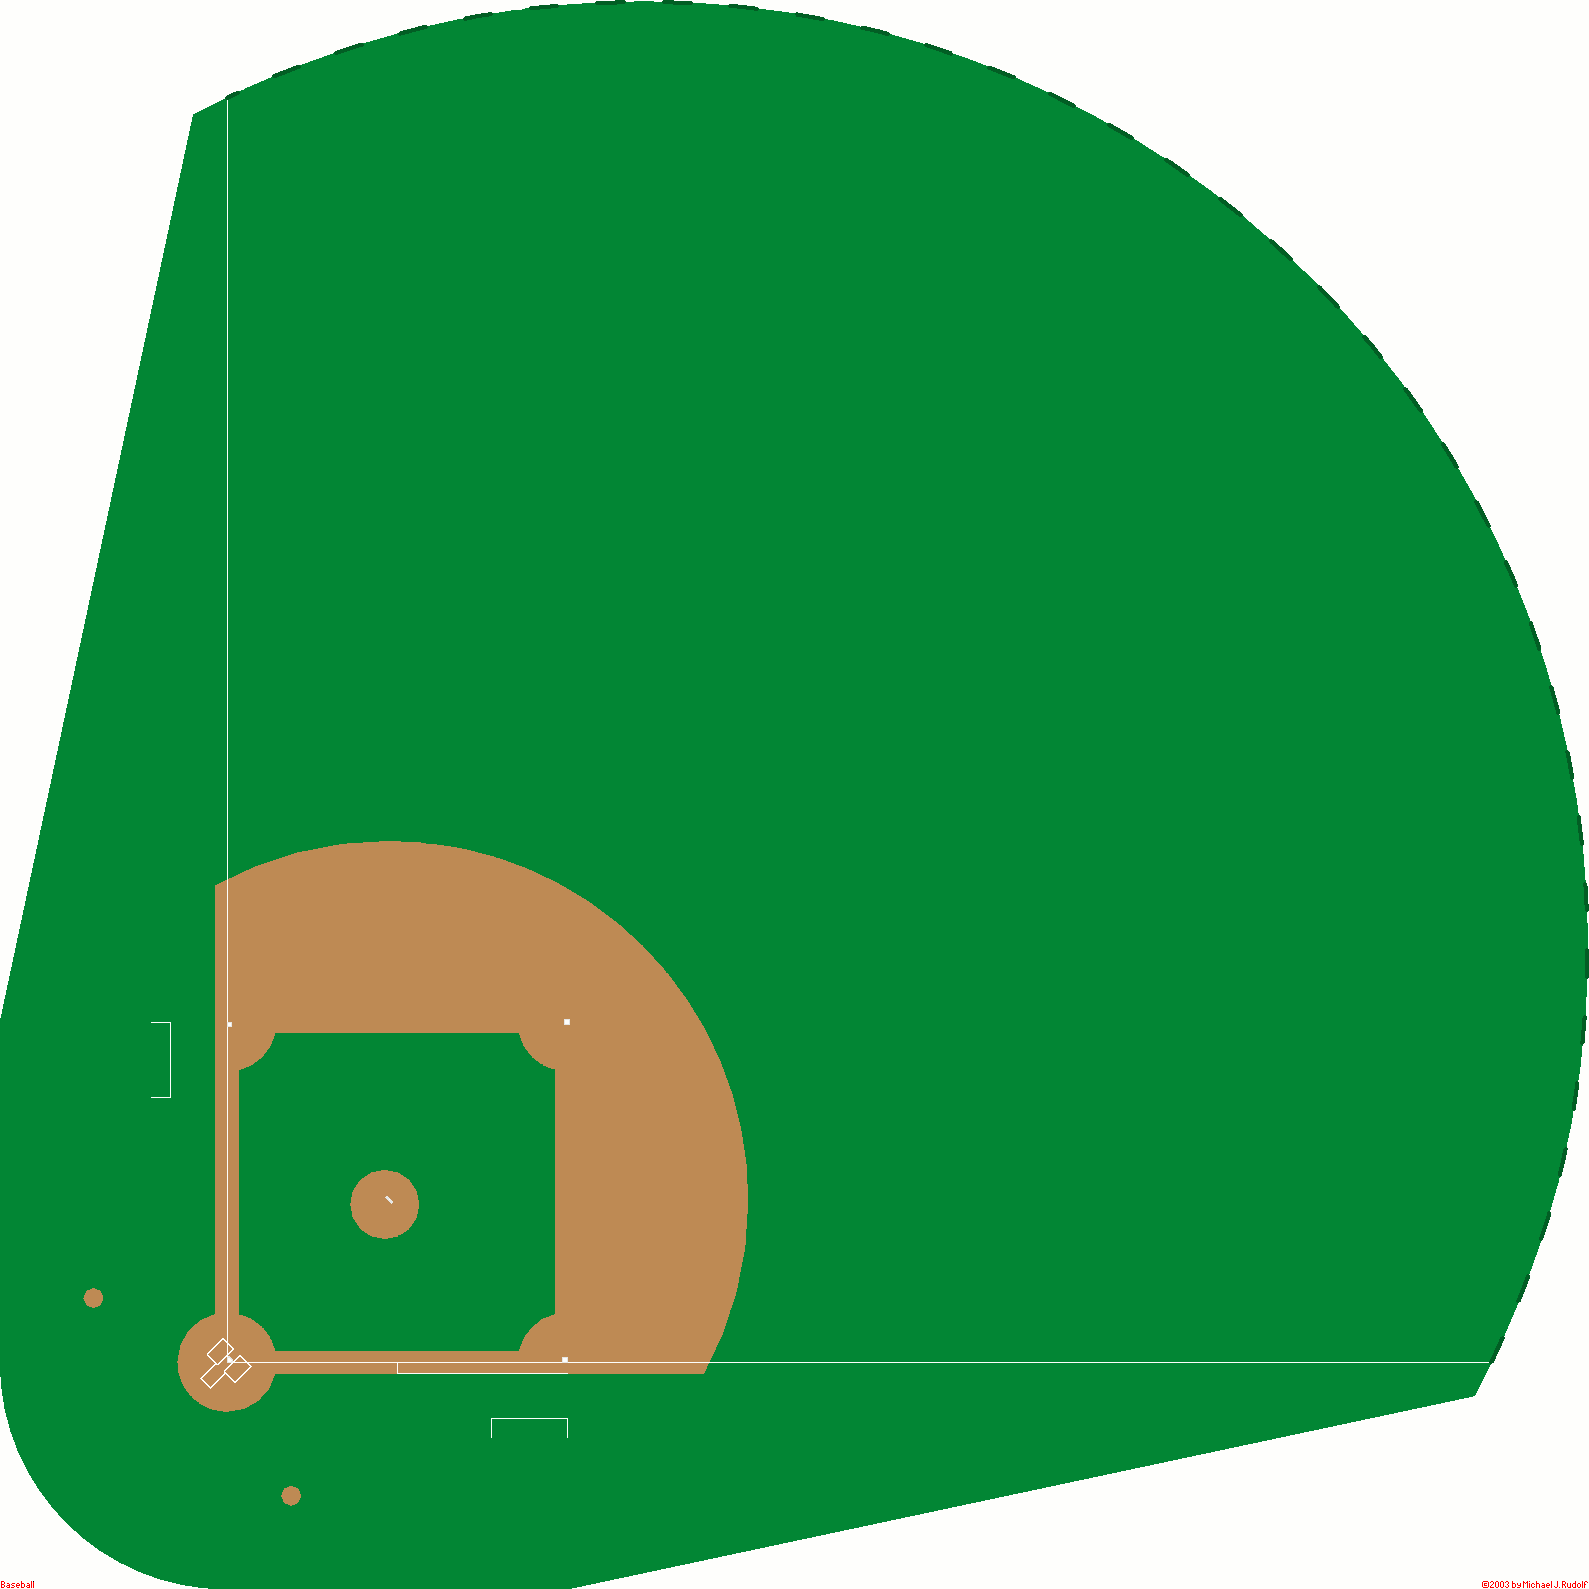 free-blank-baseball-field-diagram-download-free-blank-baseball-field-diagram-png-images-free